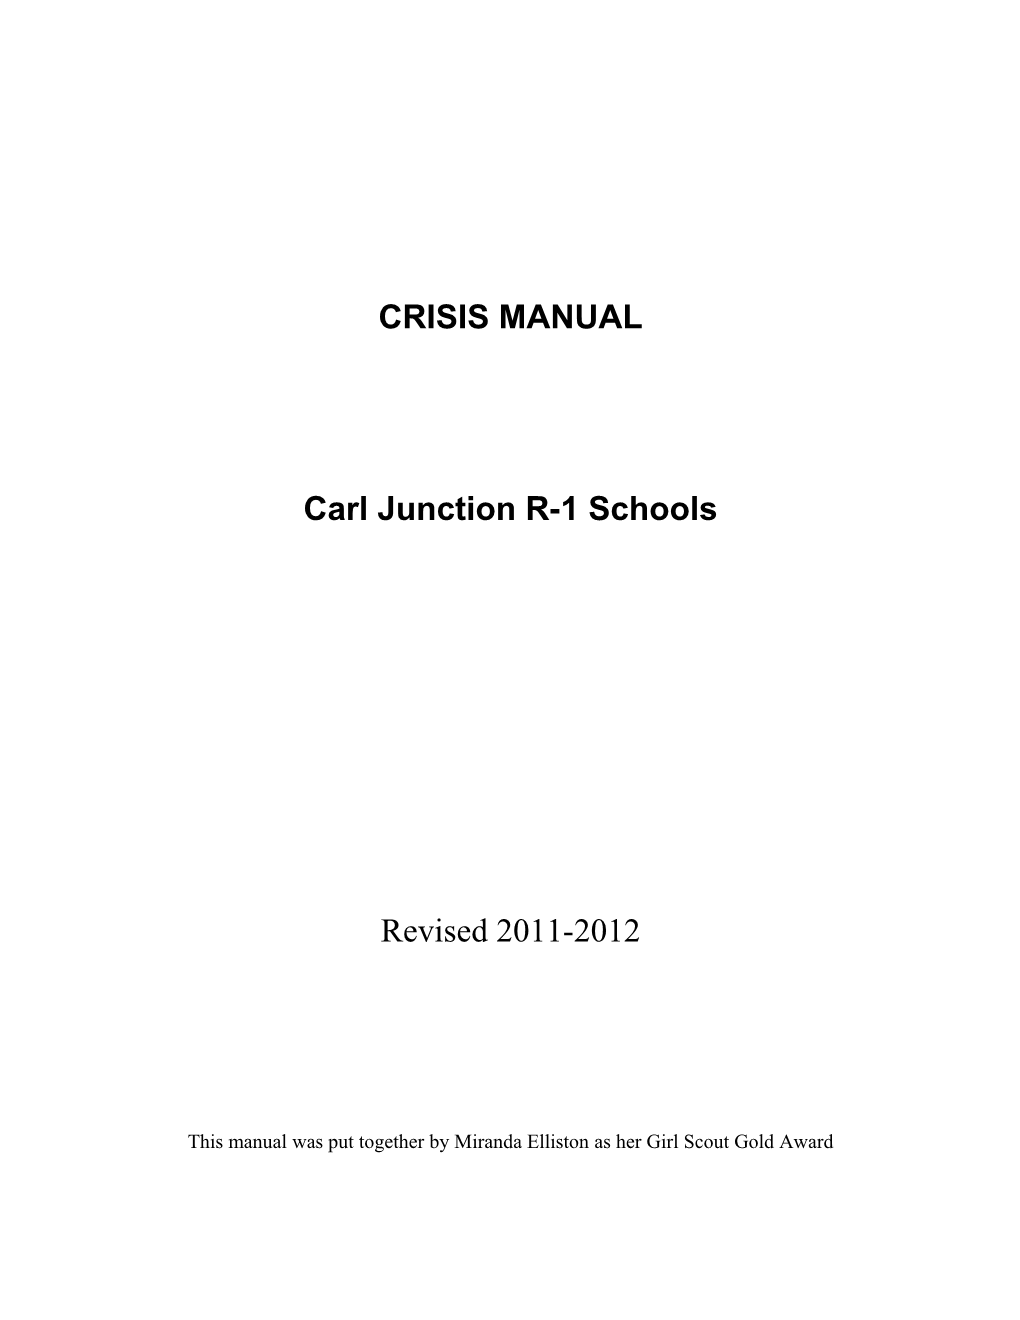 Crisis Manual